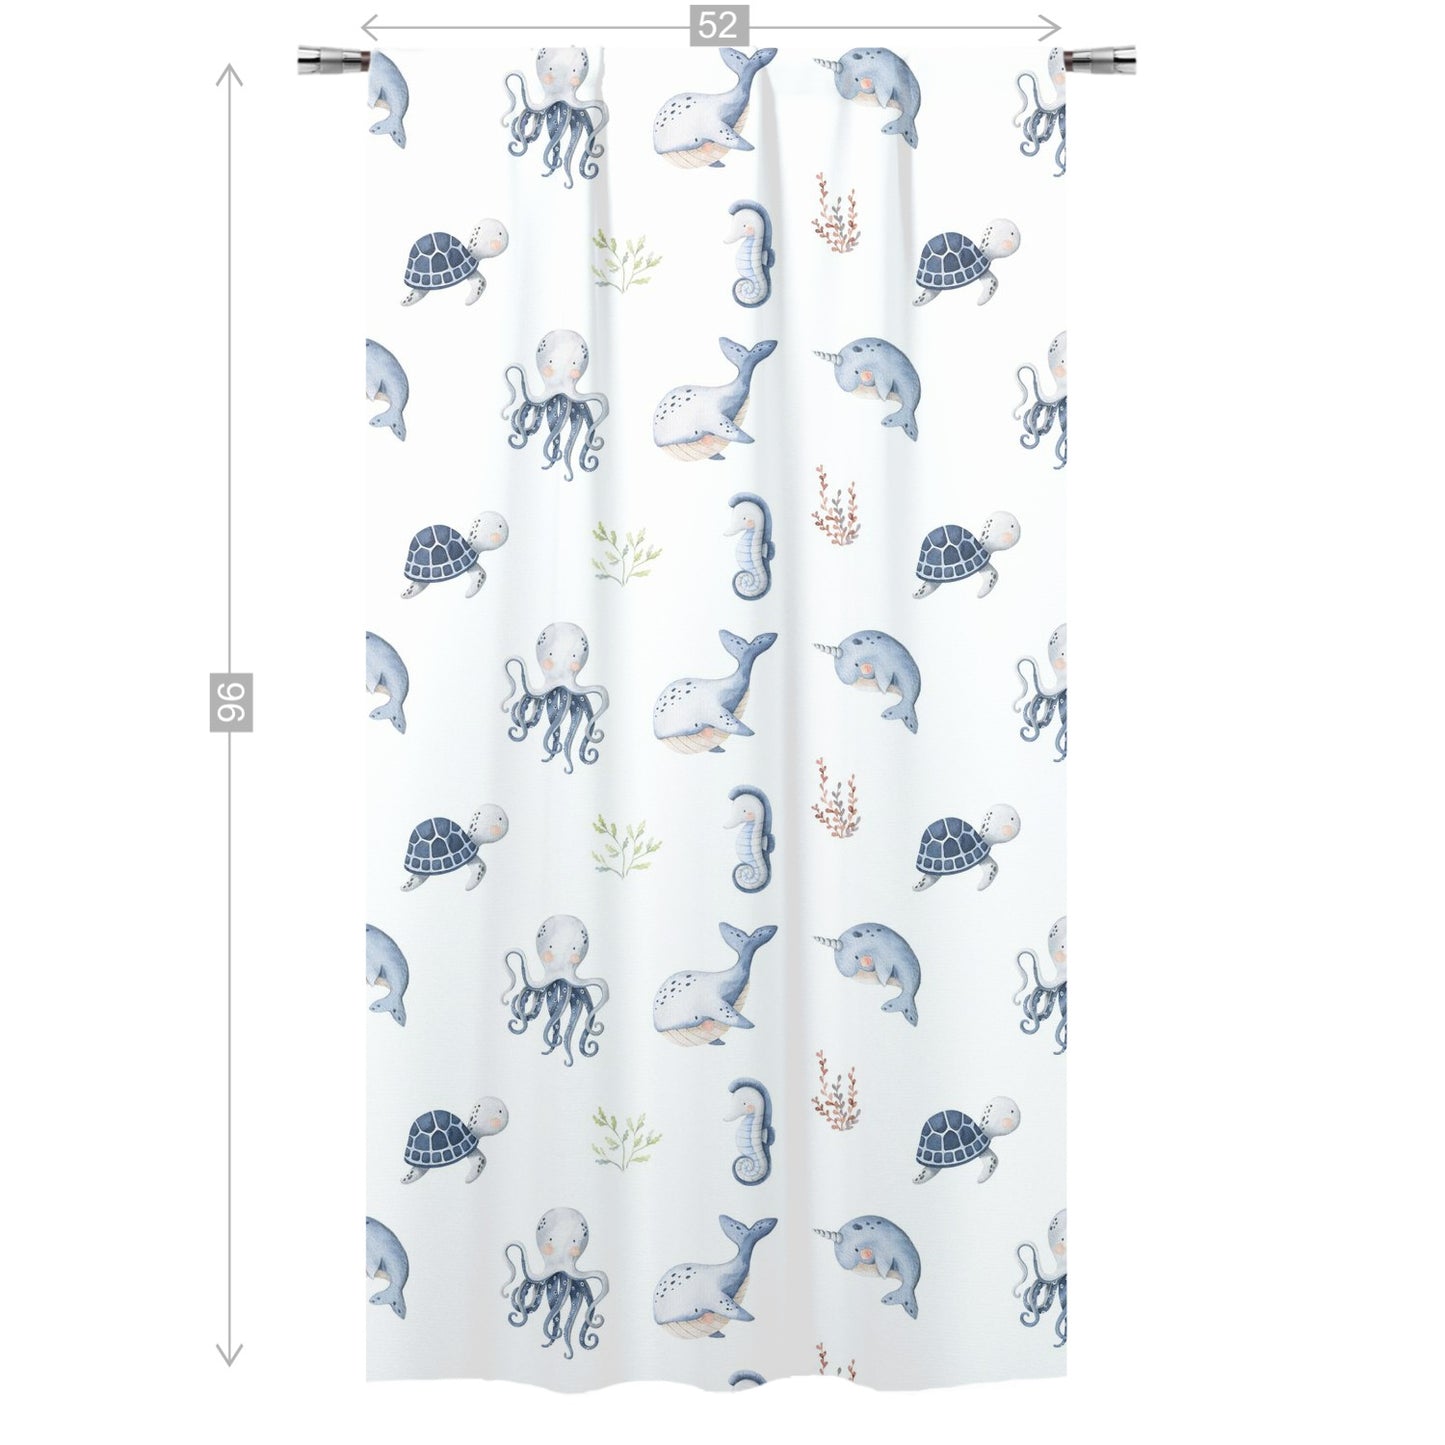 Under the Sea Nursery Curtains Single Panel | Sea Animals Nursery Decor - Little Ocean